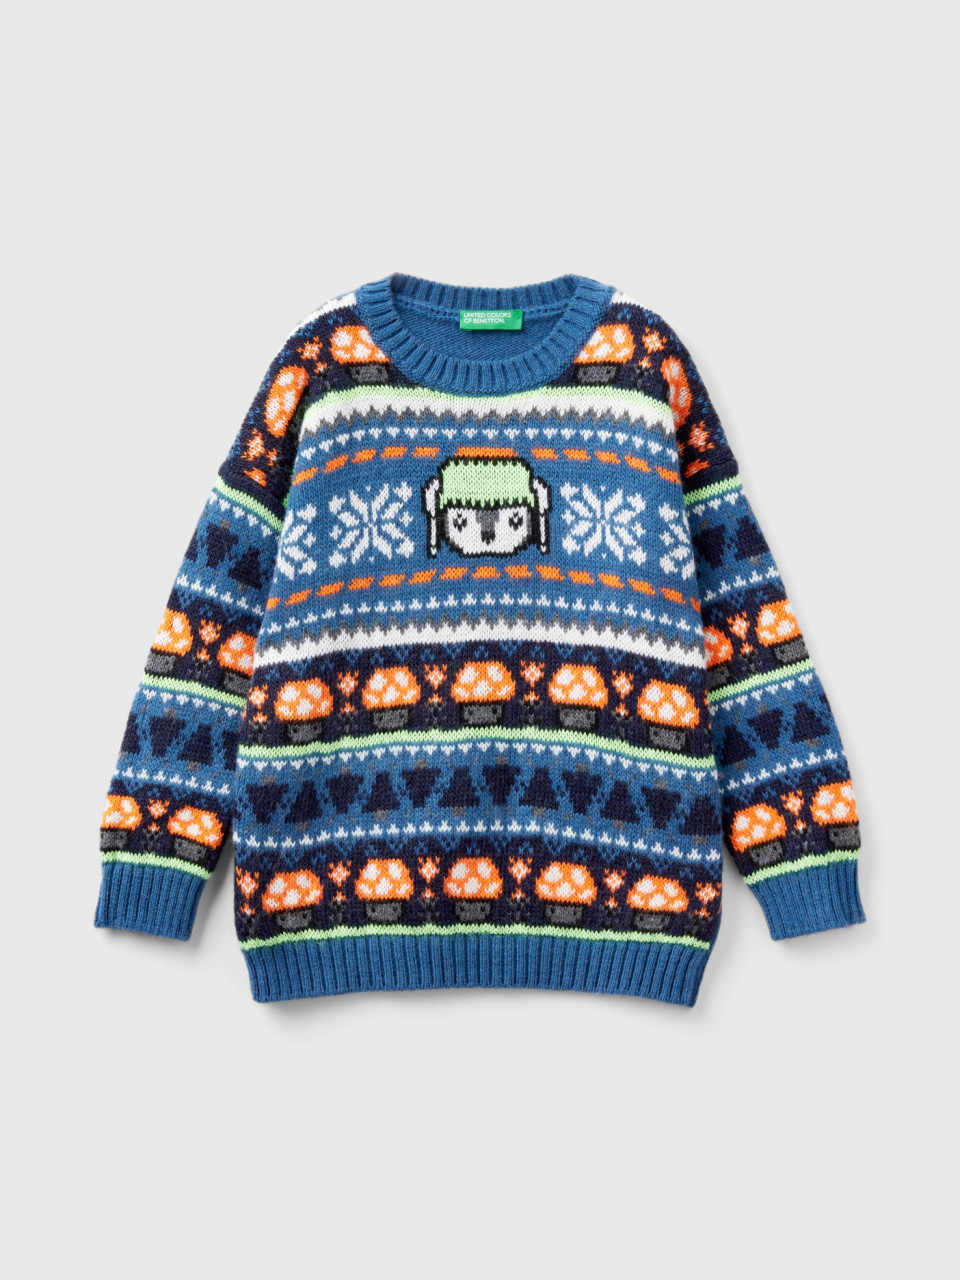 Benetton, Jacquard Sweater In Wool Blend, Multi-color, Kids